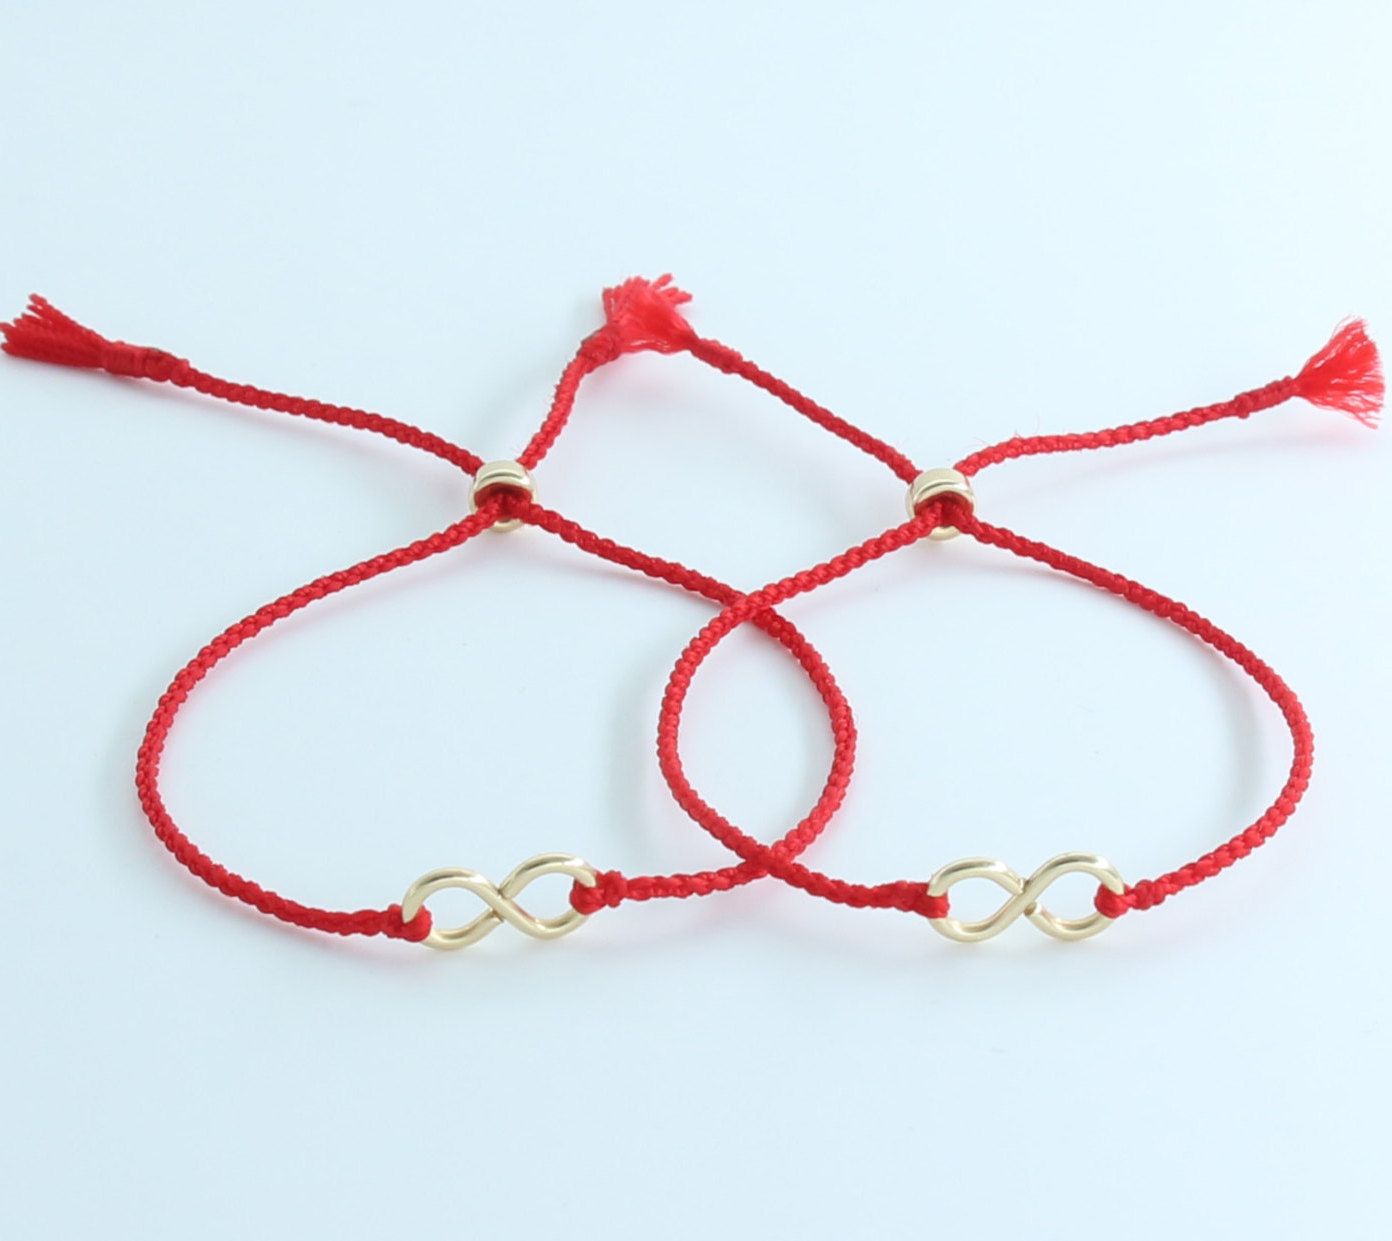 DIY Fast  Easy Good Luck Red Thread Bracelet  How to make Red String  Kabbalah Protection Bracelet  YouTube